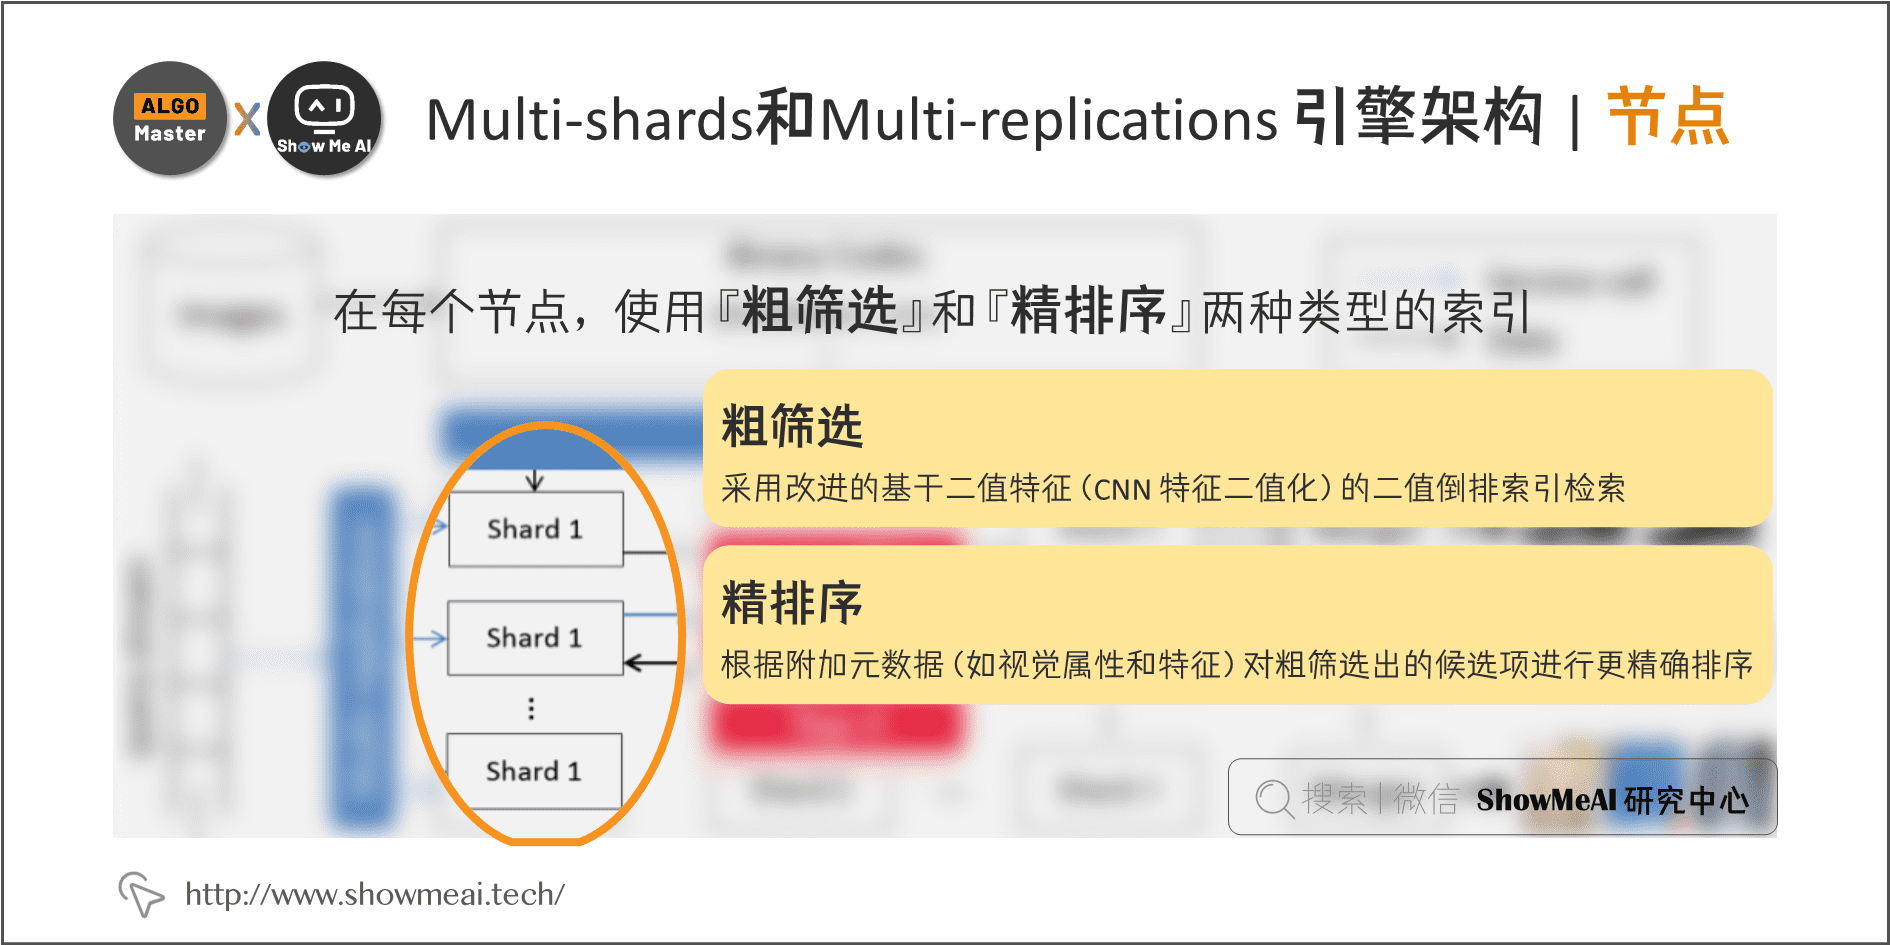 Multi-shards和Multi-replications 引擎架构 | 节点; 4-20